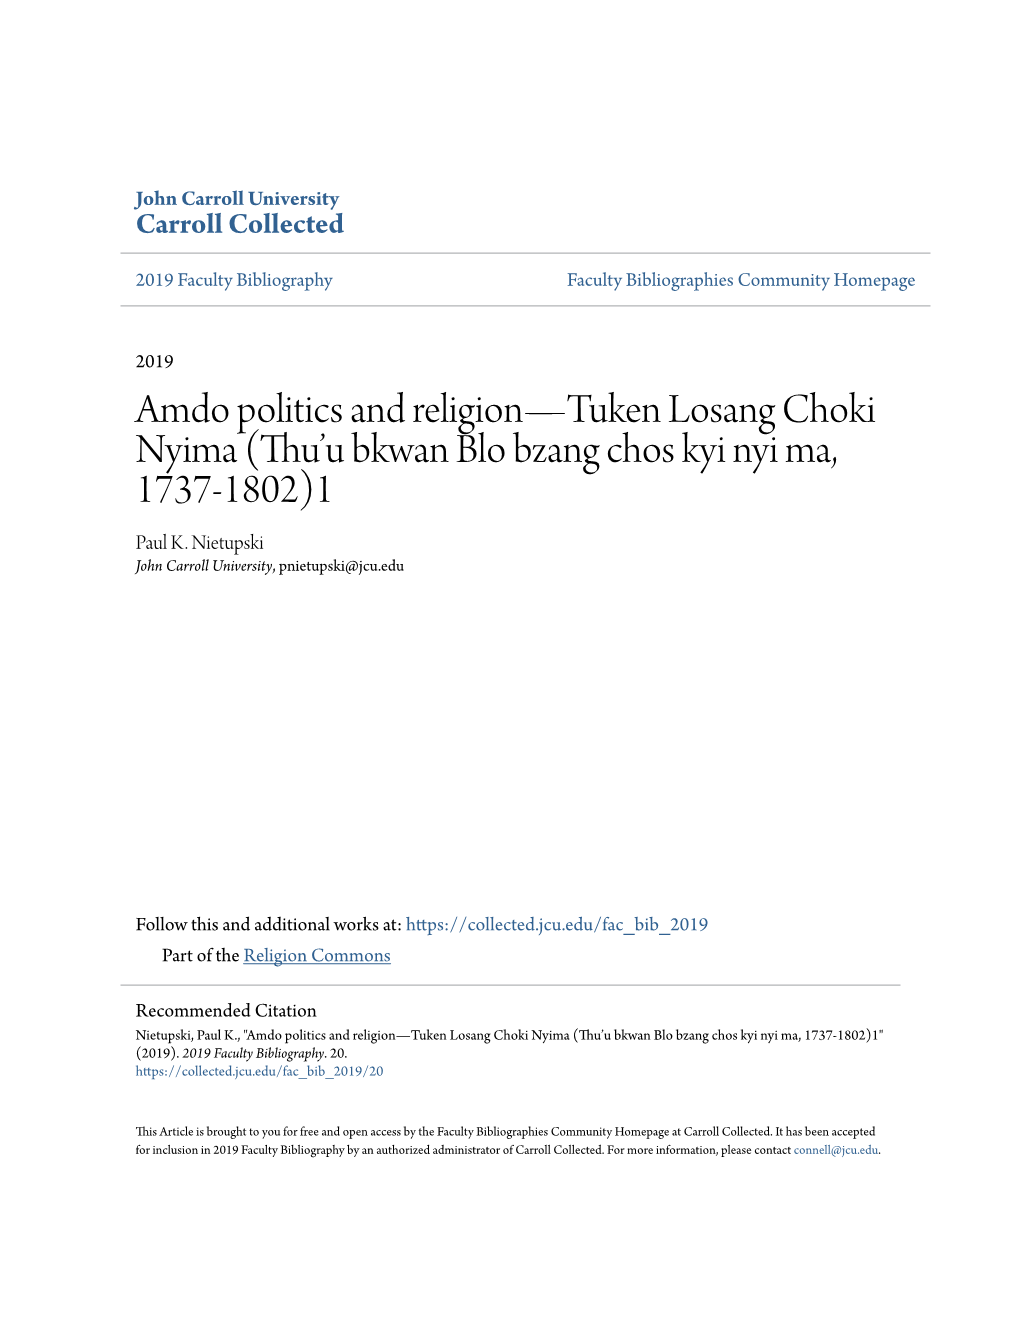 Amdo Politics and Religion—Tuken Losang Choki Nyima (Thu’U Bkwan Blo Bzang Chos Kyi Nyi Ma, 1737-1802)1 Paul K